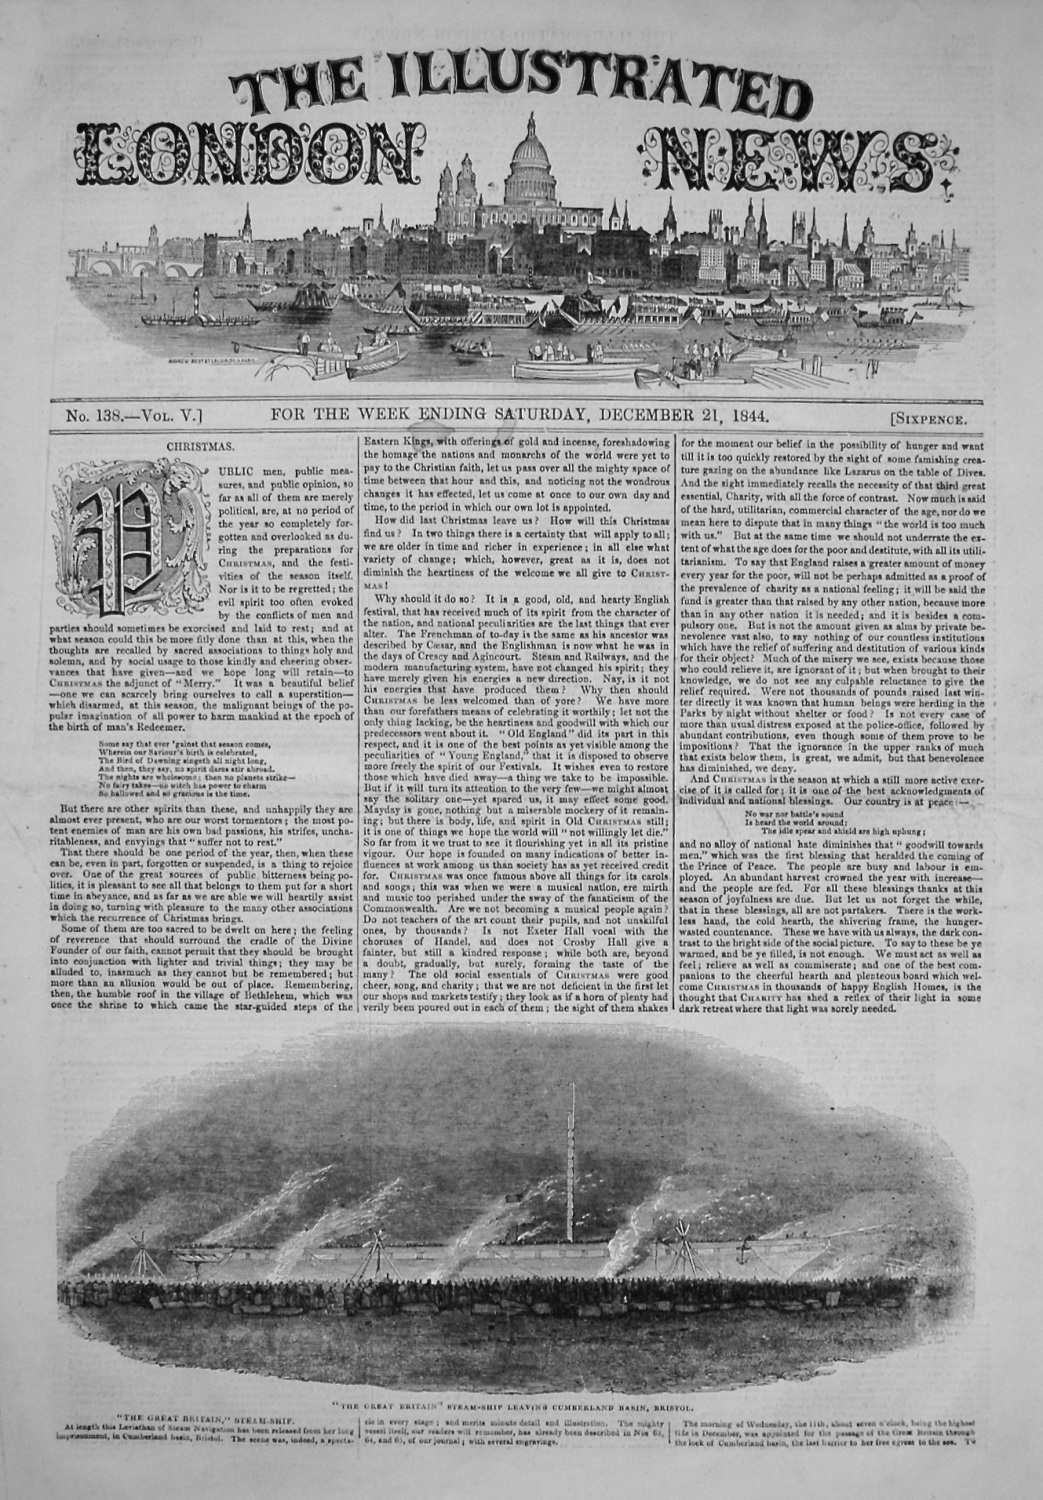 Illustrated London News. December 21st, 1844.